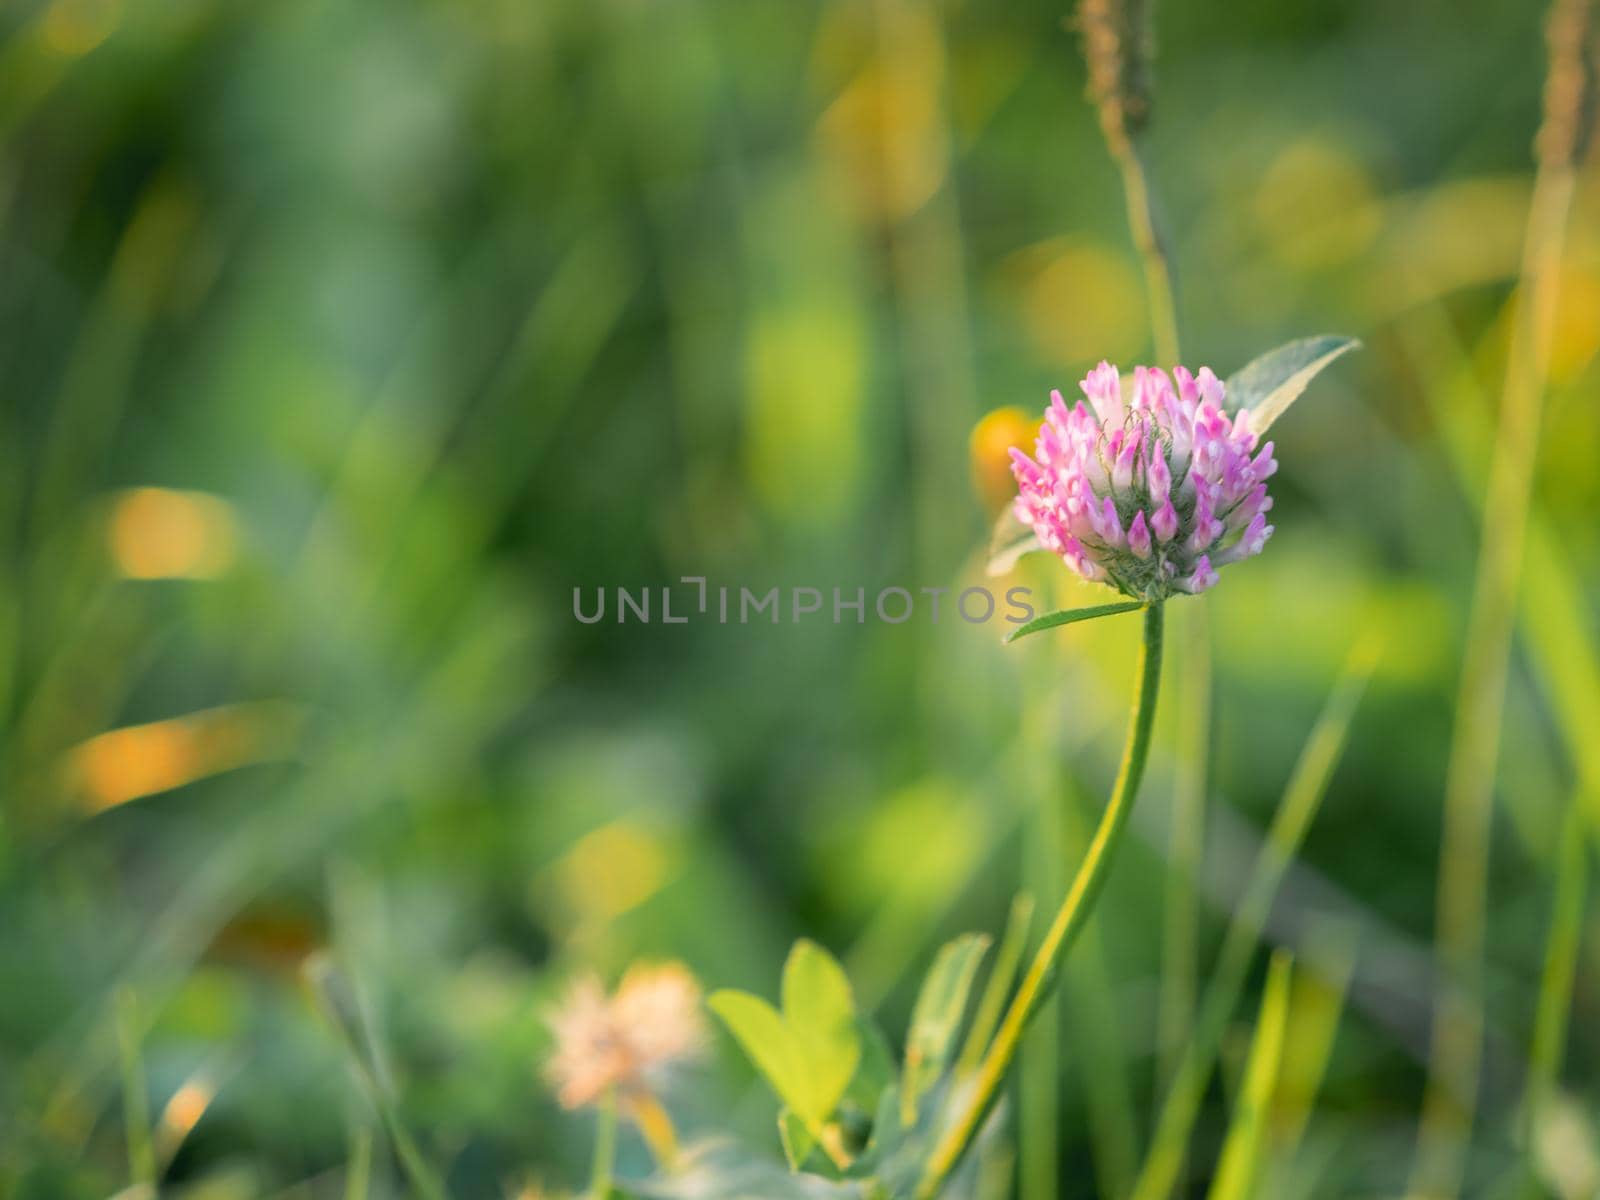 Pink clover on blurred green grass background. Flower in bloom. Summer background.